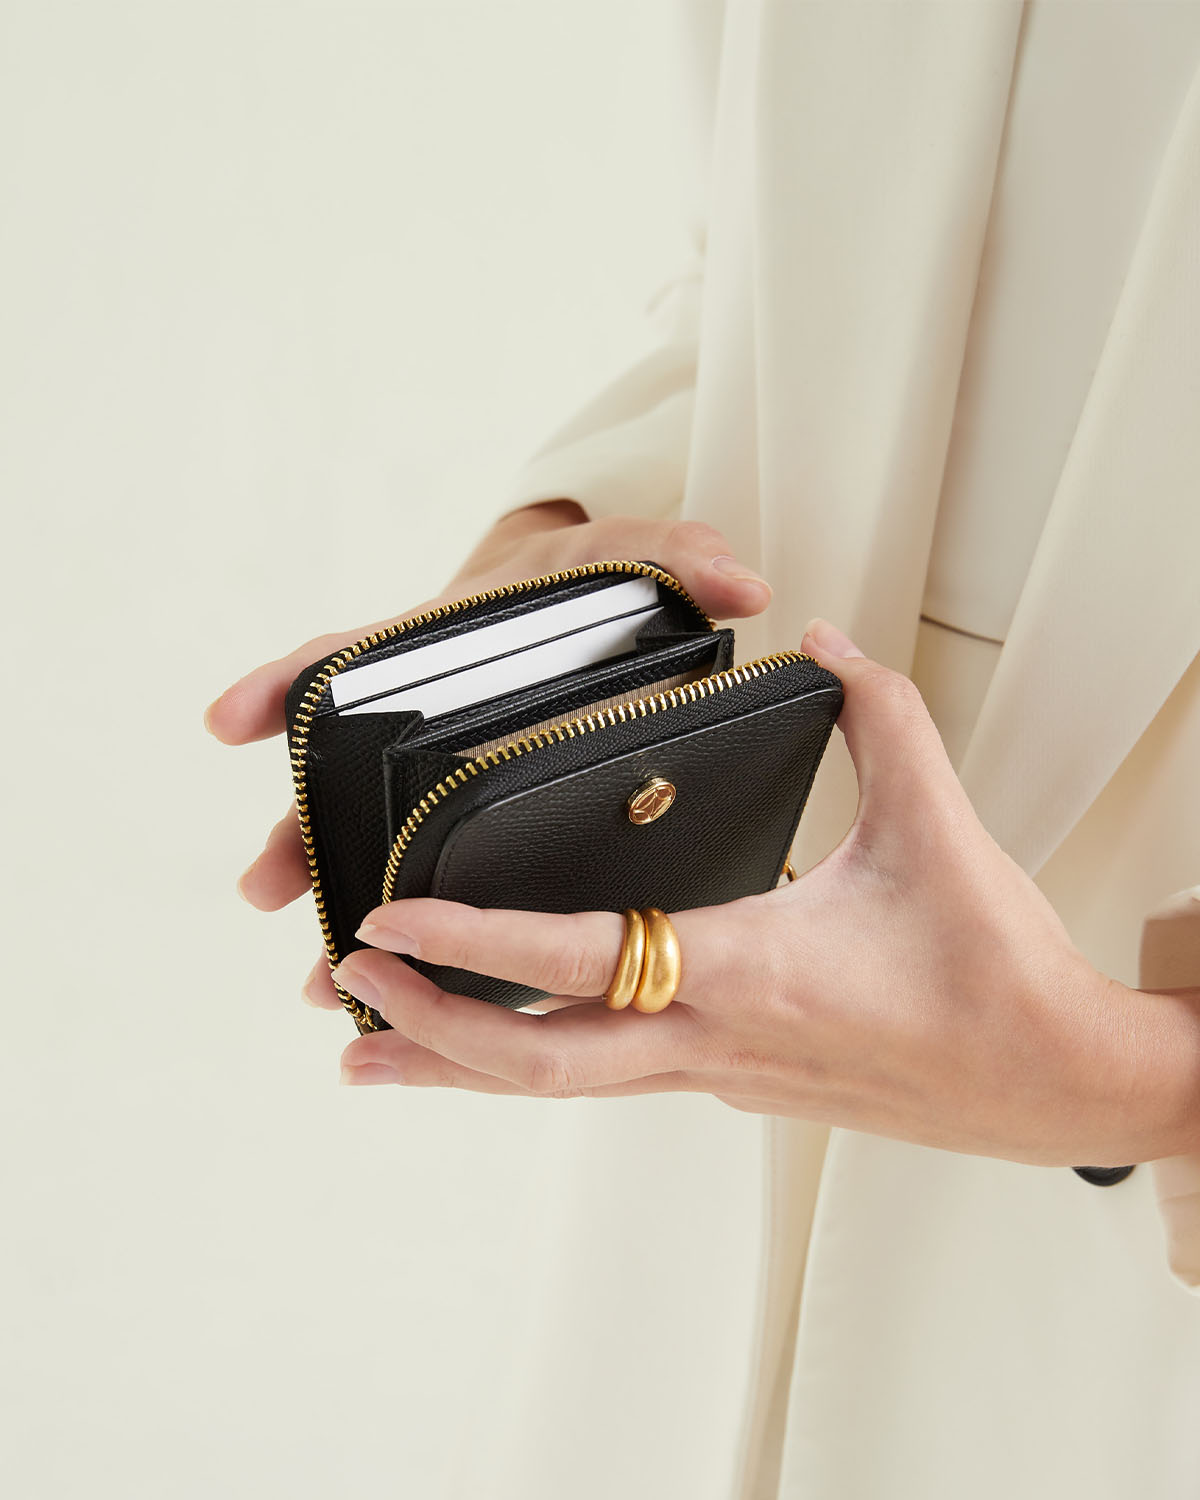 VERA Emily Zipped Wallet in Powerful Black กระเป๋าสตางค์หนังแท้ ทรงสั้น ซิปรอบ สีดำ